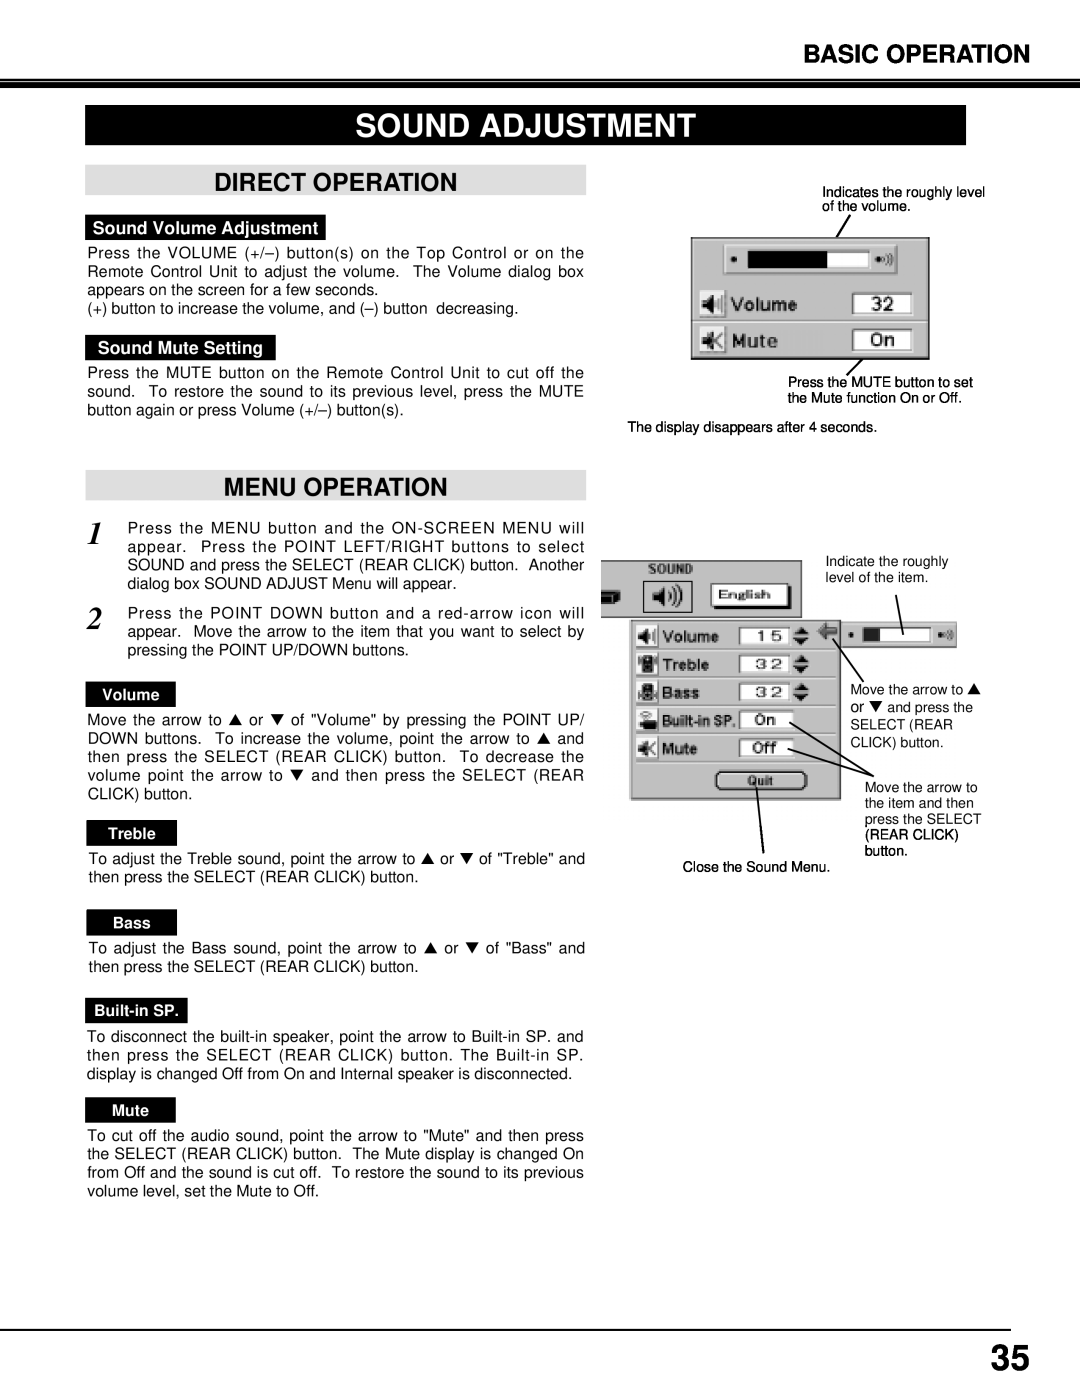 Eiki LC-X3/X3L Sound Adjustment, Direct Operation, Menu Operation, Basic Operation, Volume, Treble, Bass, Built-in SP 